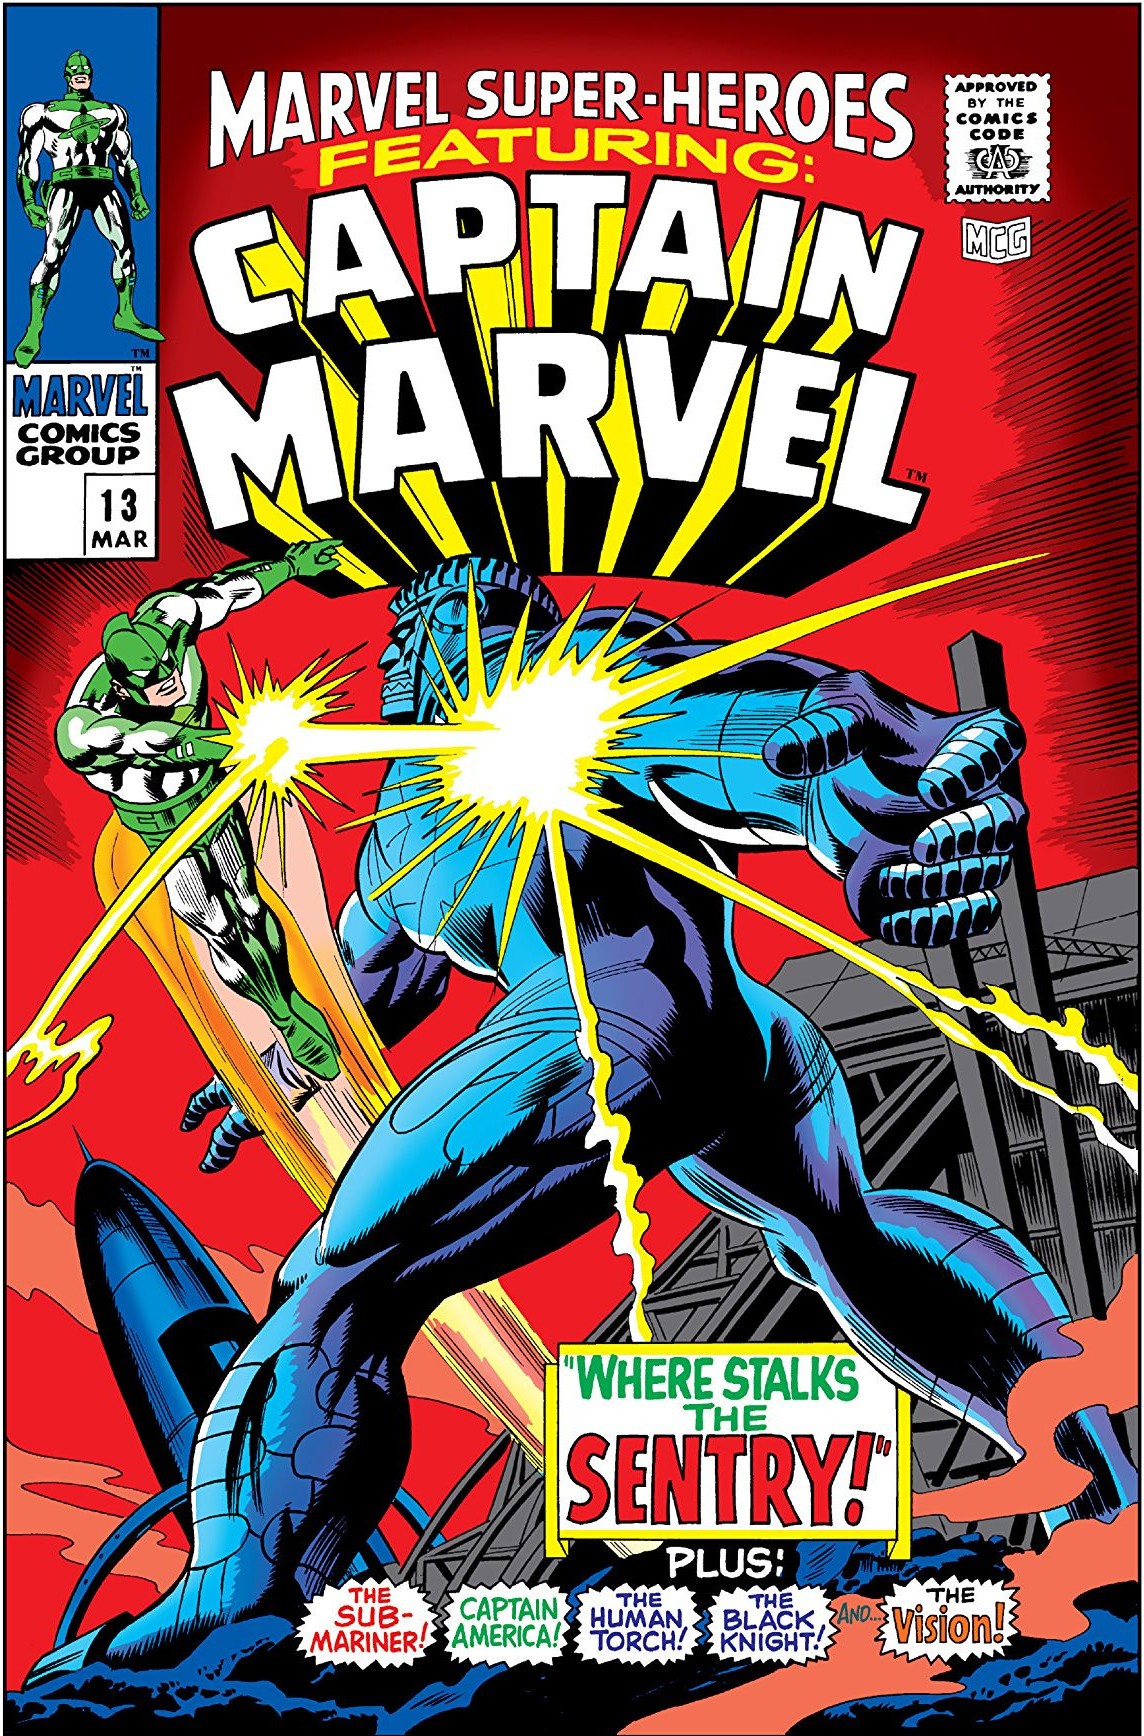 Capitã Marvel: novo trailer mostra poderes de Carol Danvers